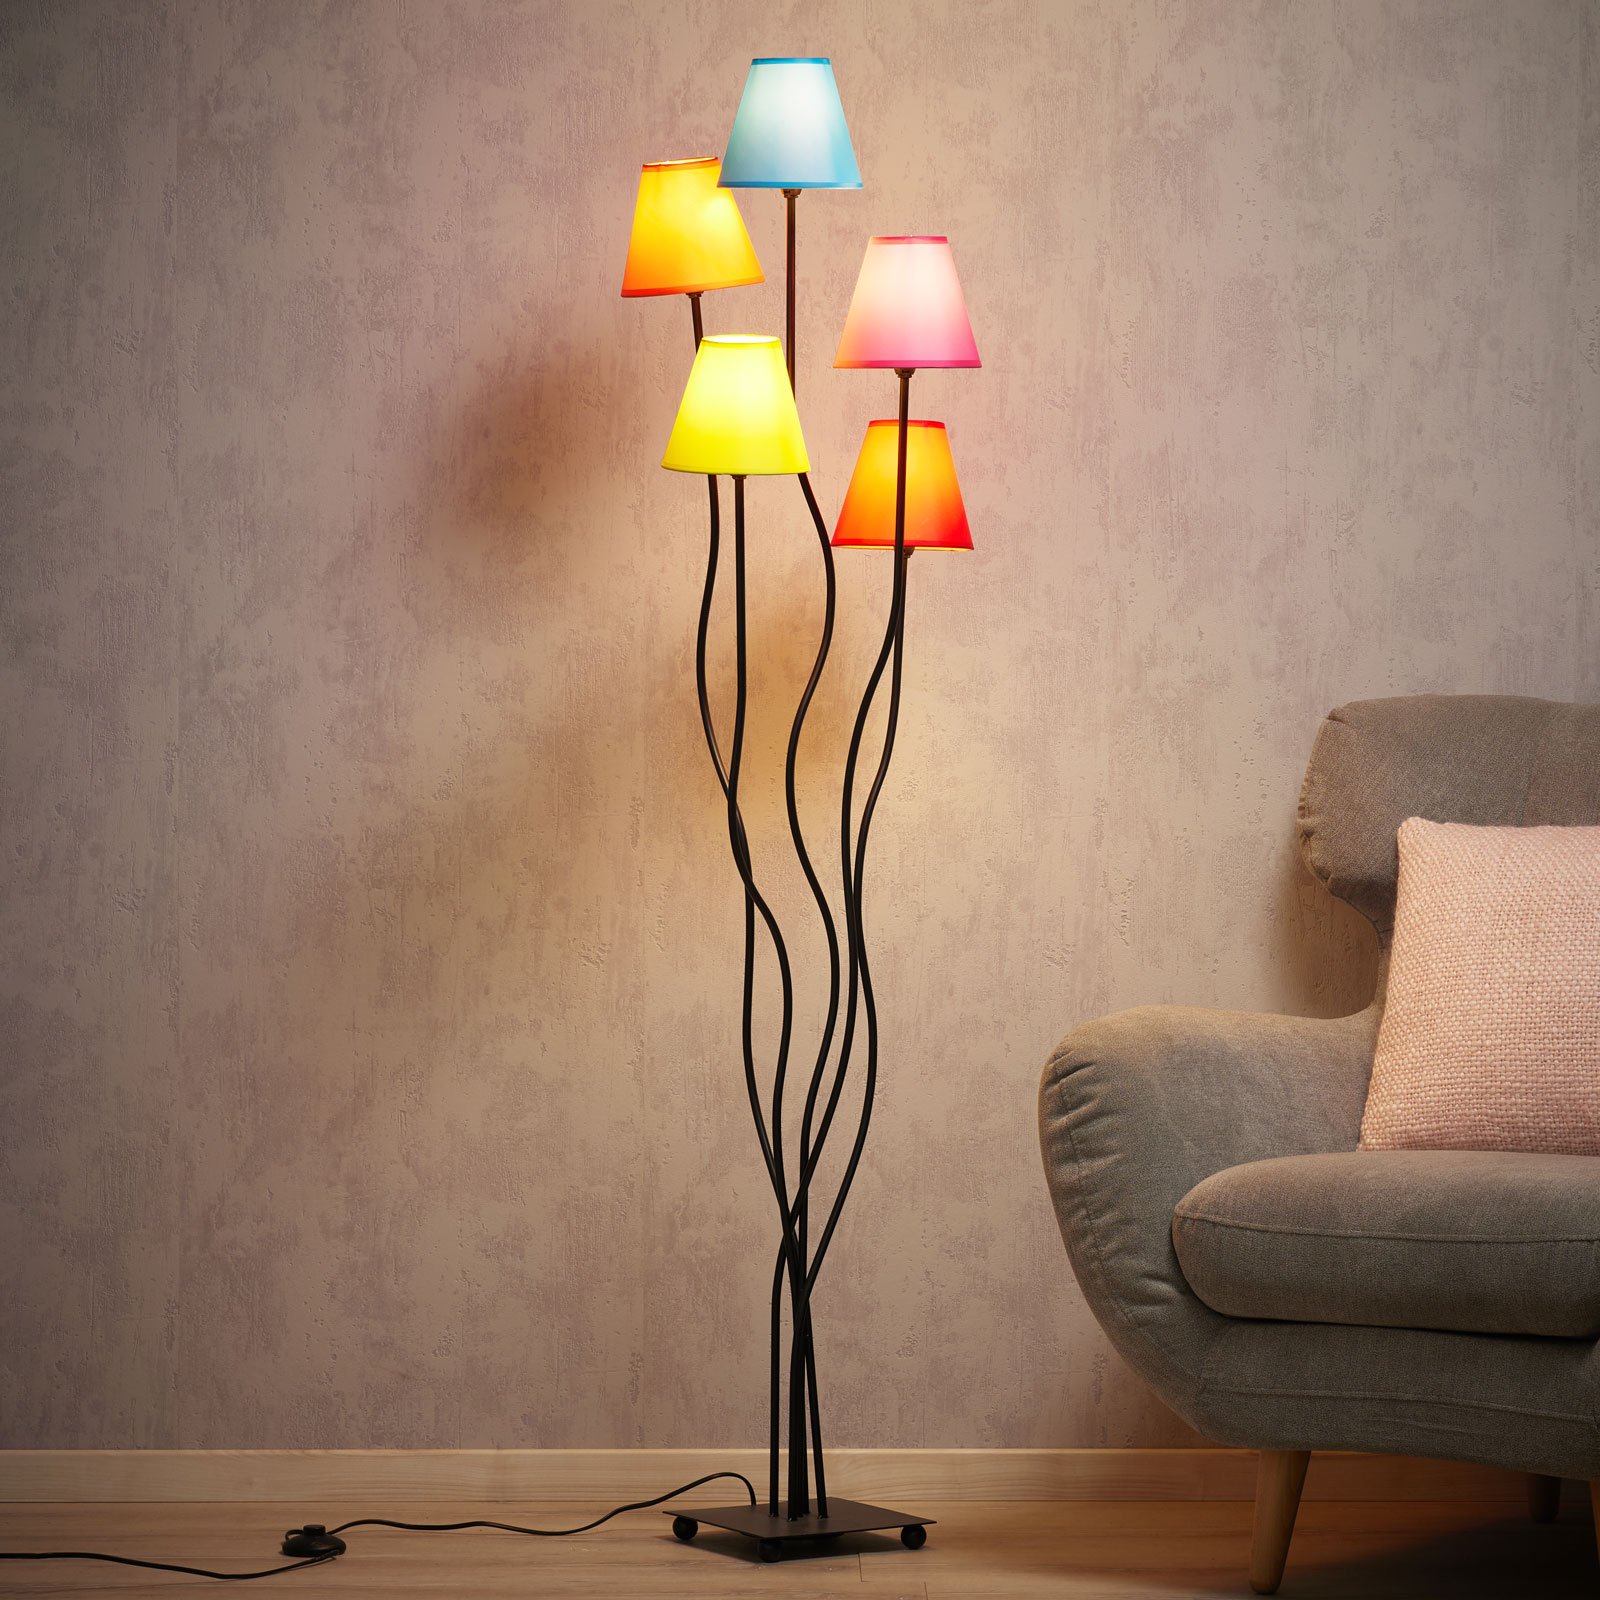 Tekstil gulvlampe Colori med 5 lyskilder farvet